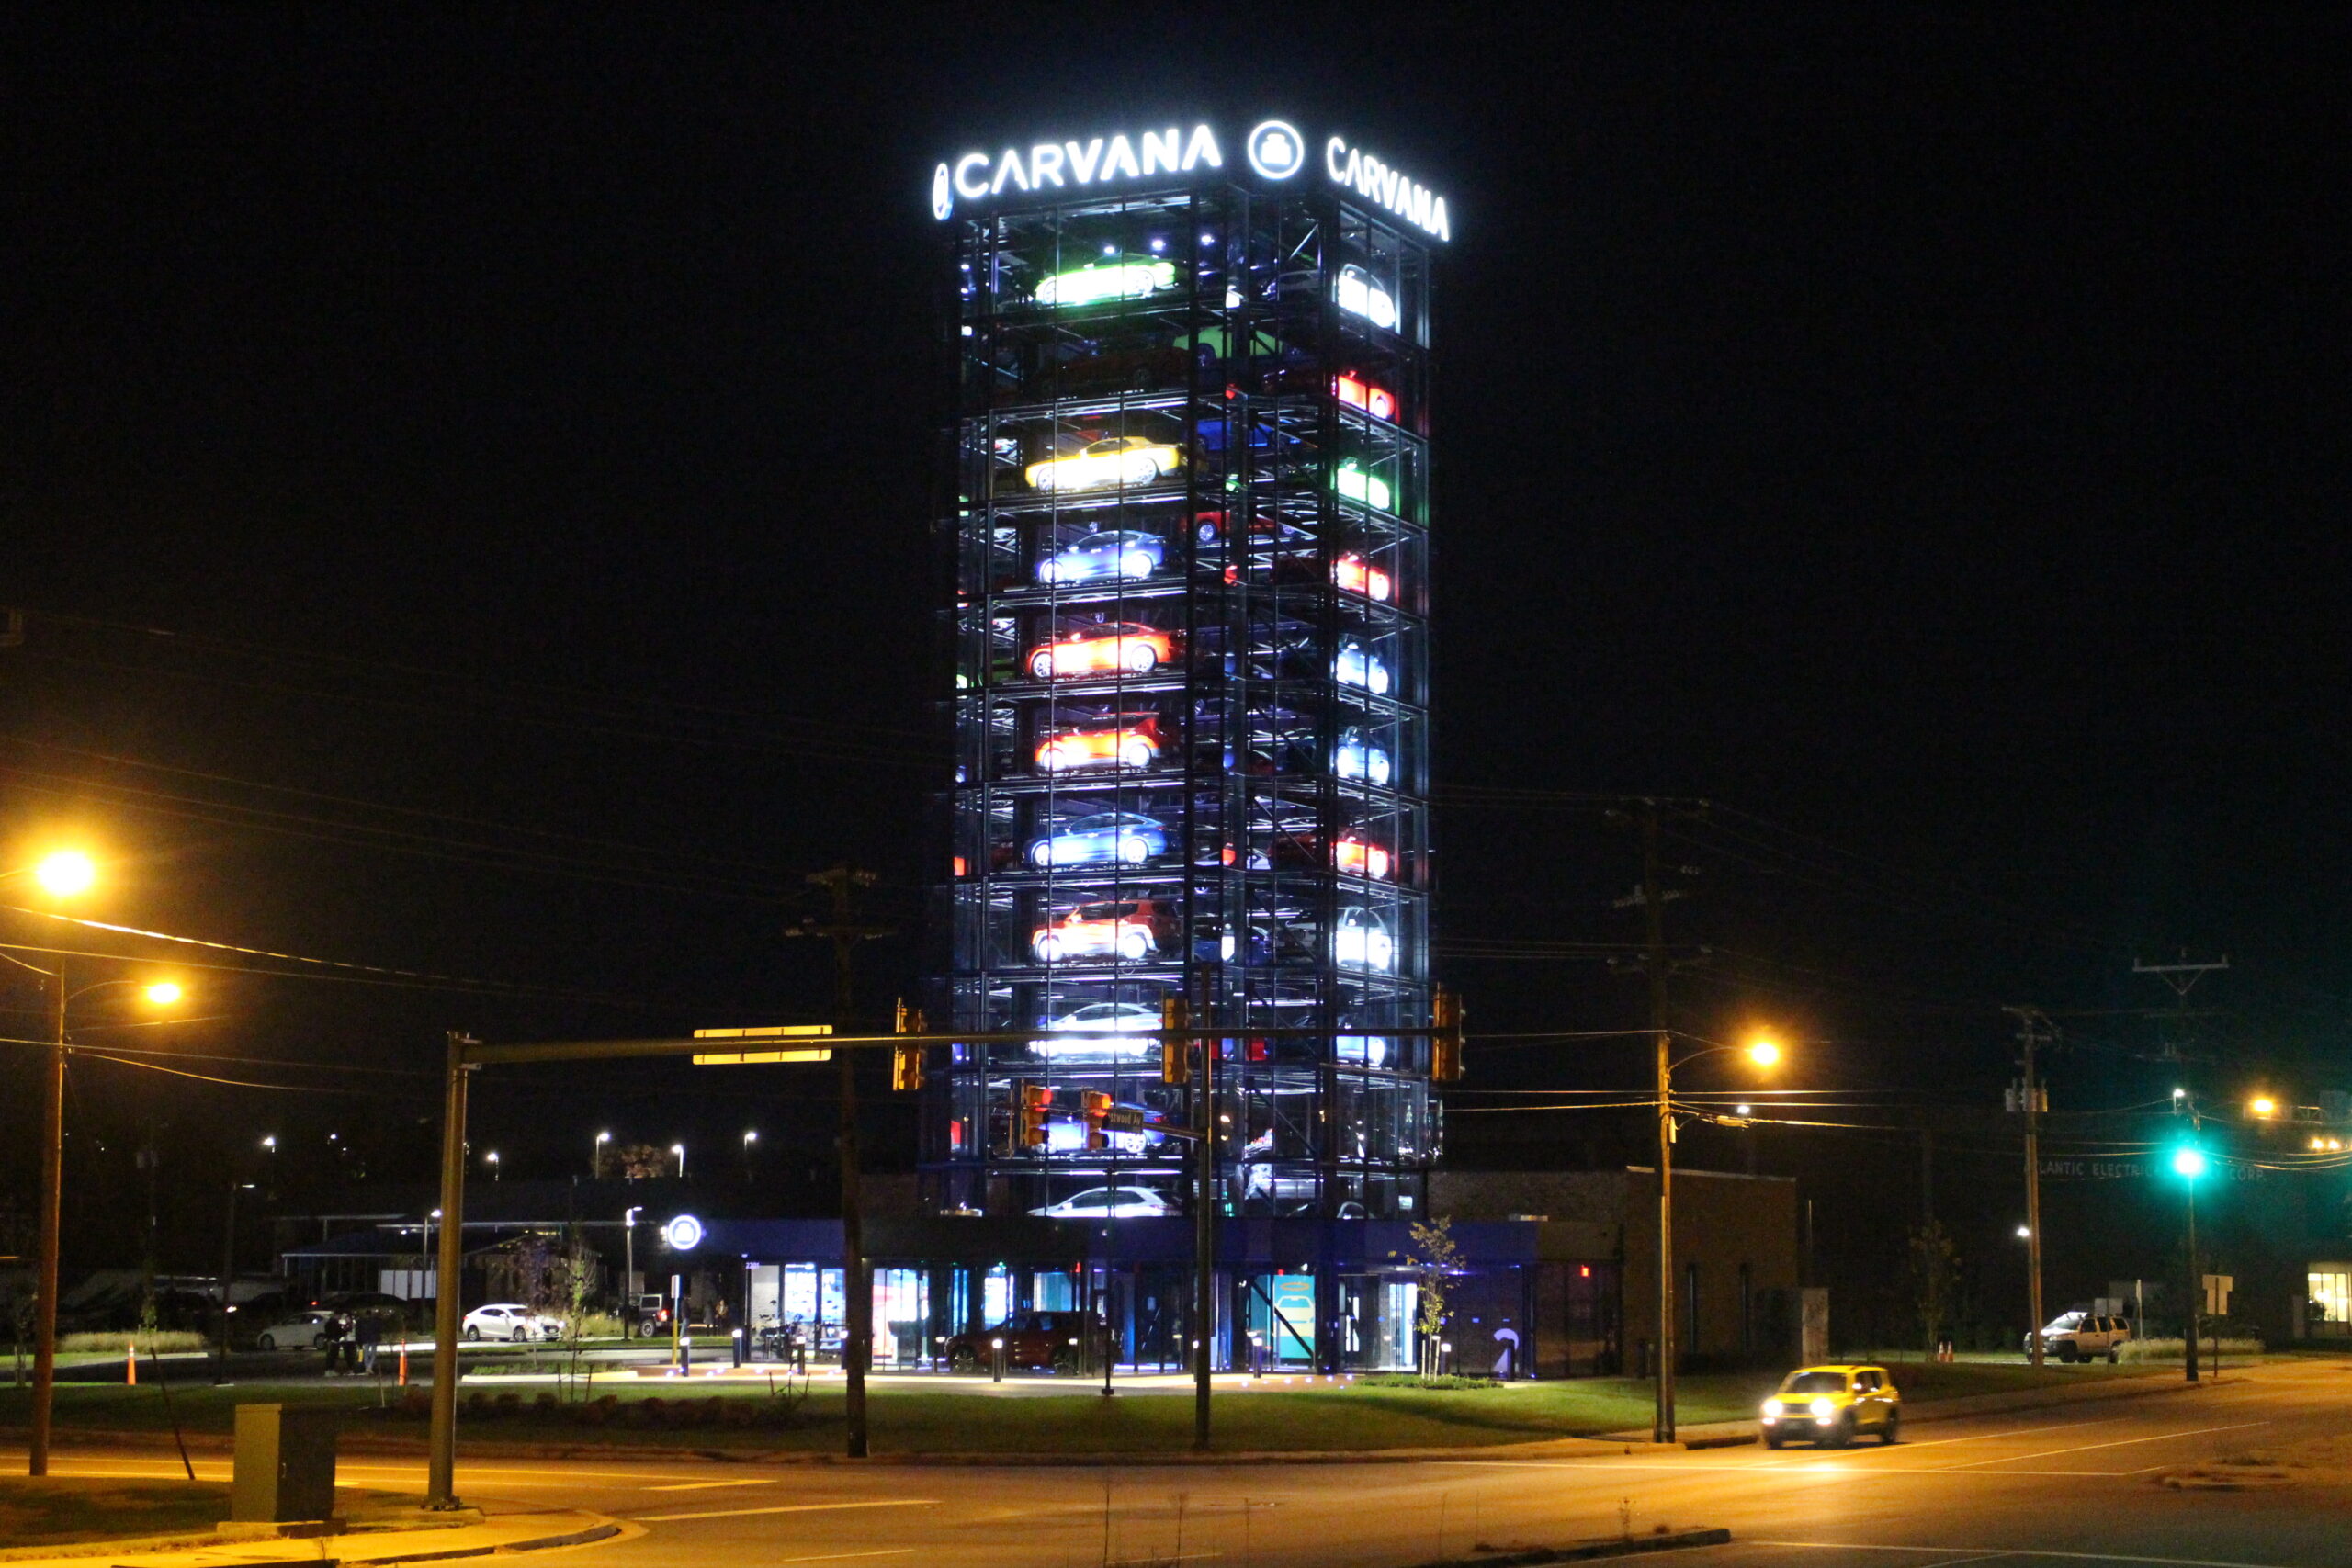 Carvana rolls out car vending machine